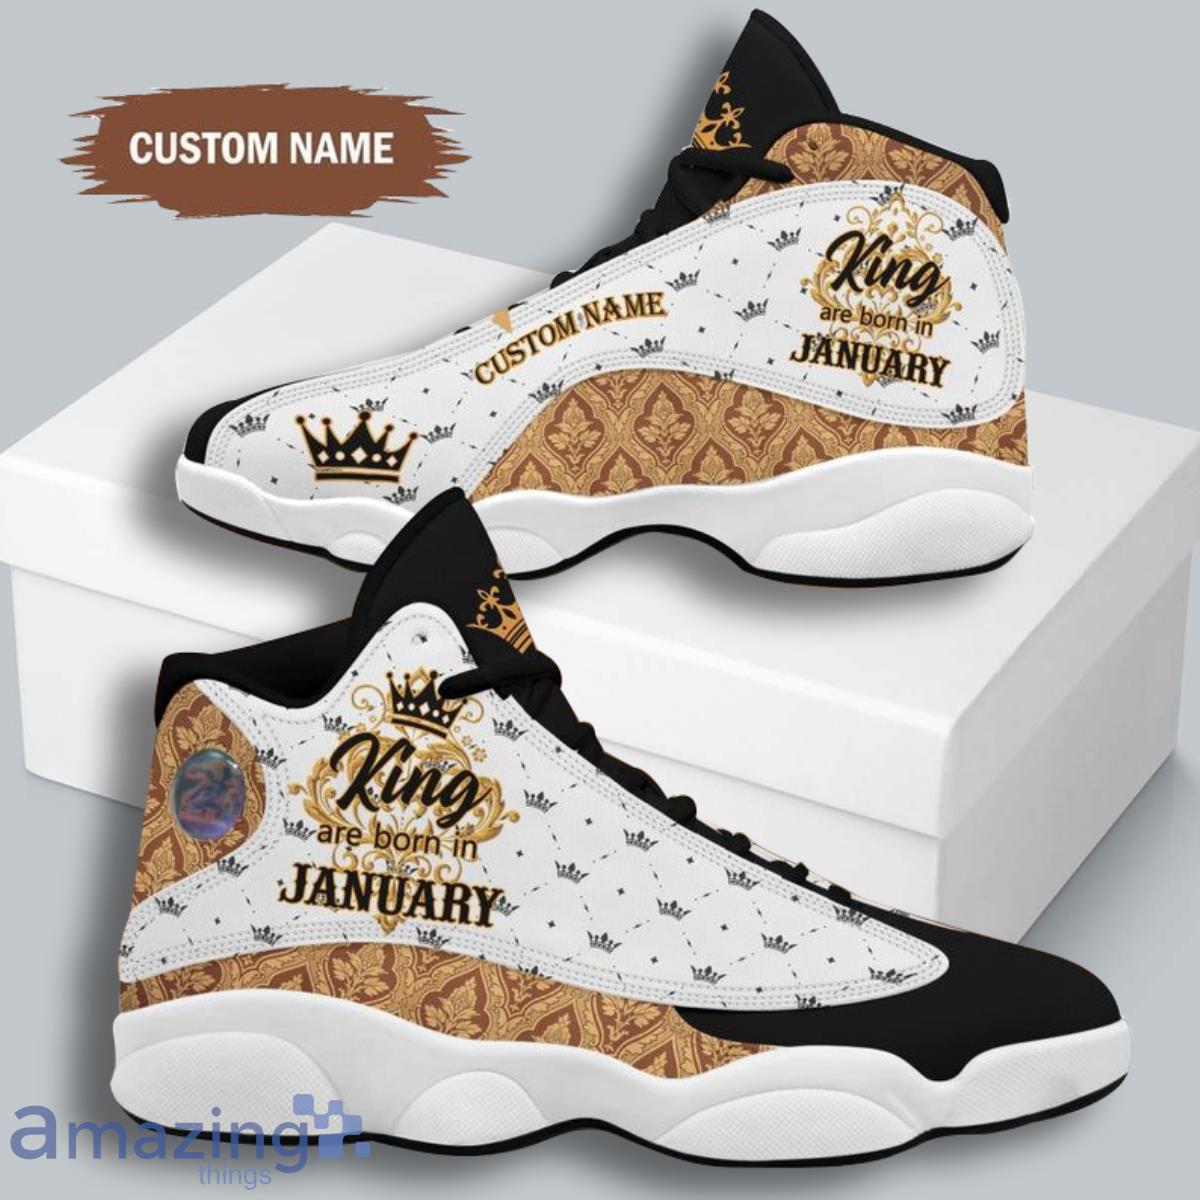 King Was Born In January In Luxury Pattern Air Jordan 13 Custom